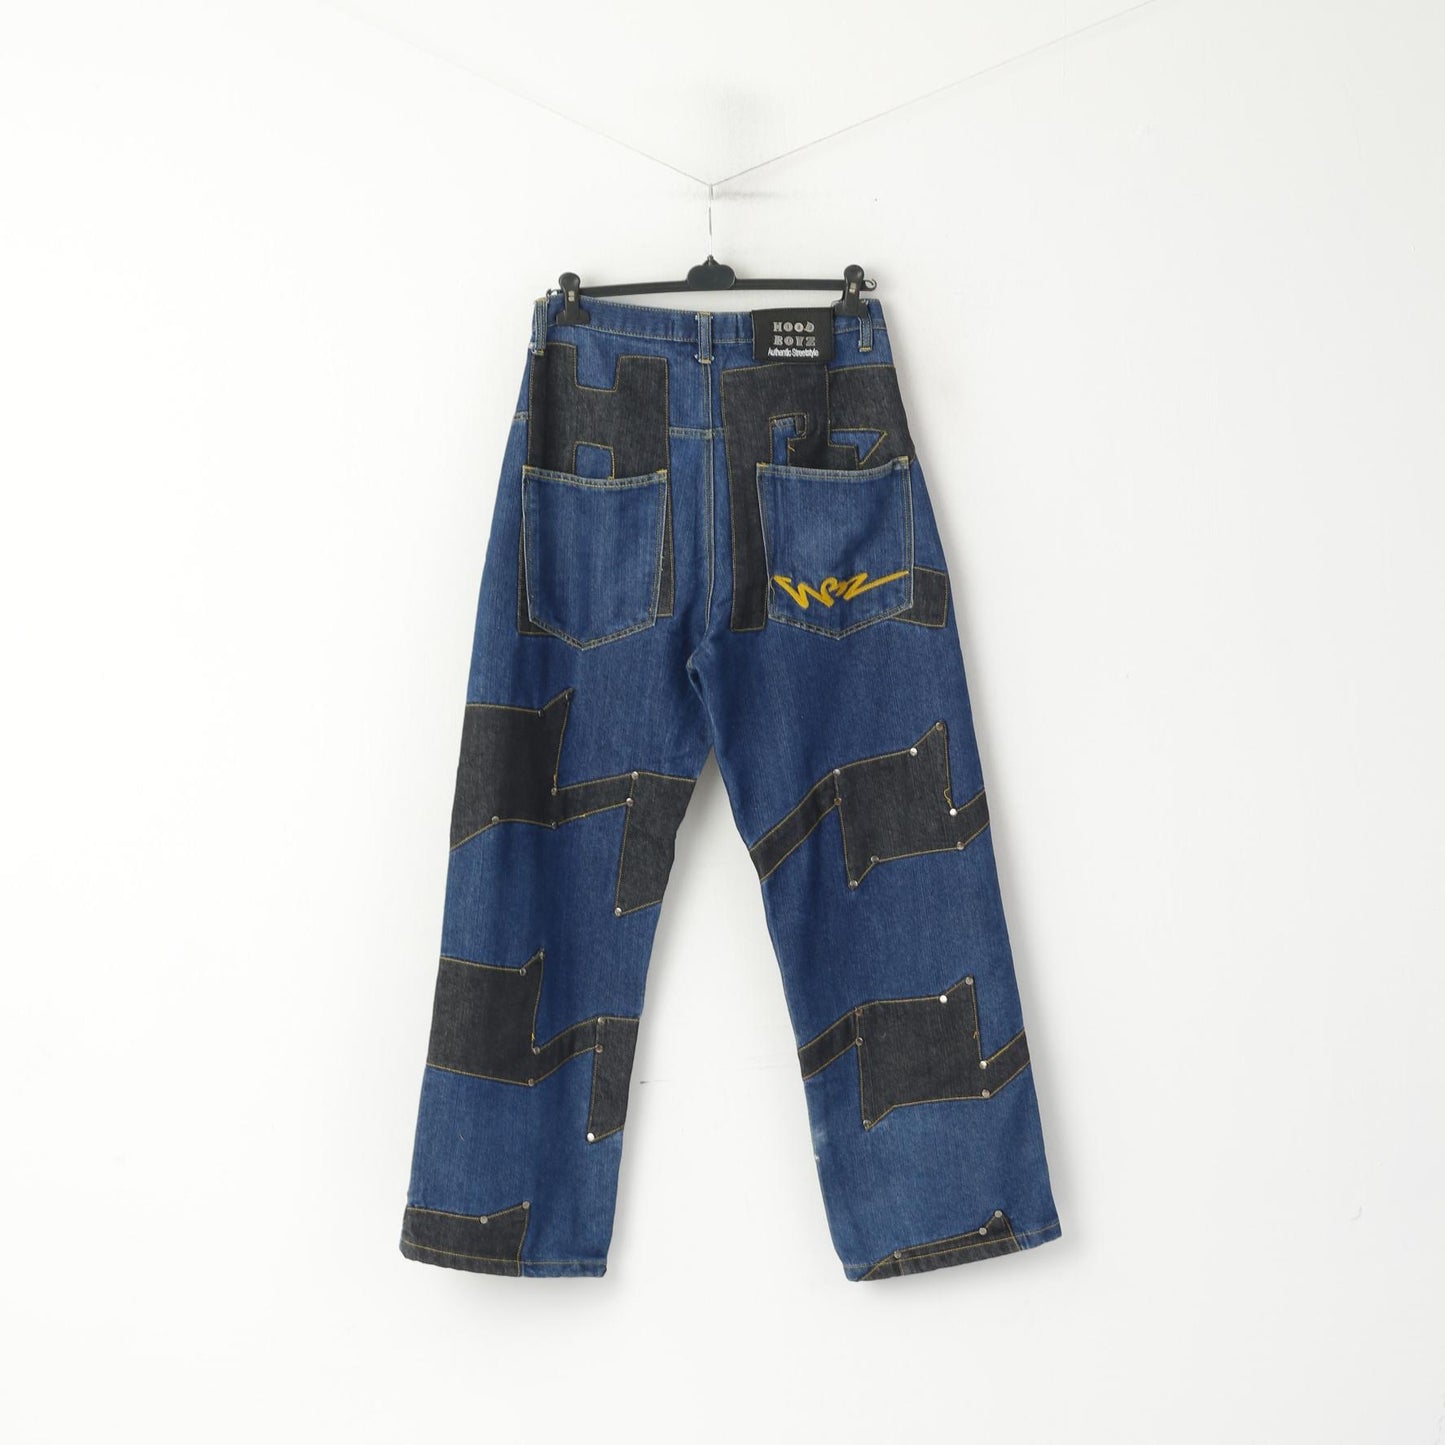 Hoodboyz Men 32 Jeans Trousers Navy Denim Hip-Hop Streetstyle Western Pants